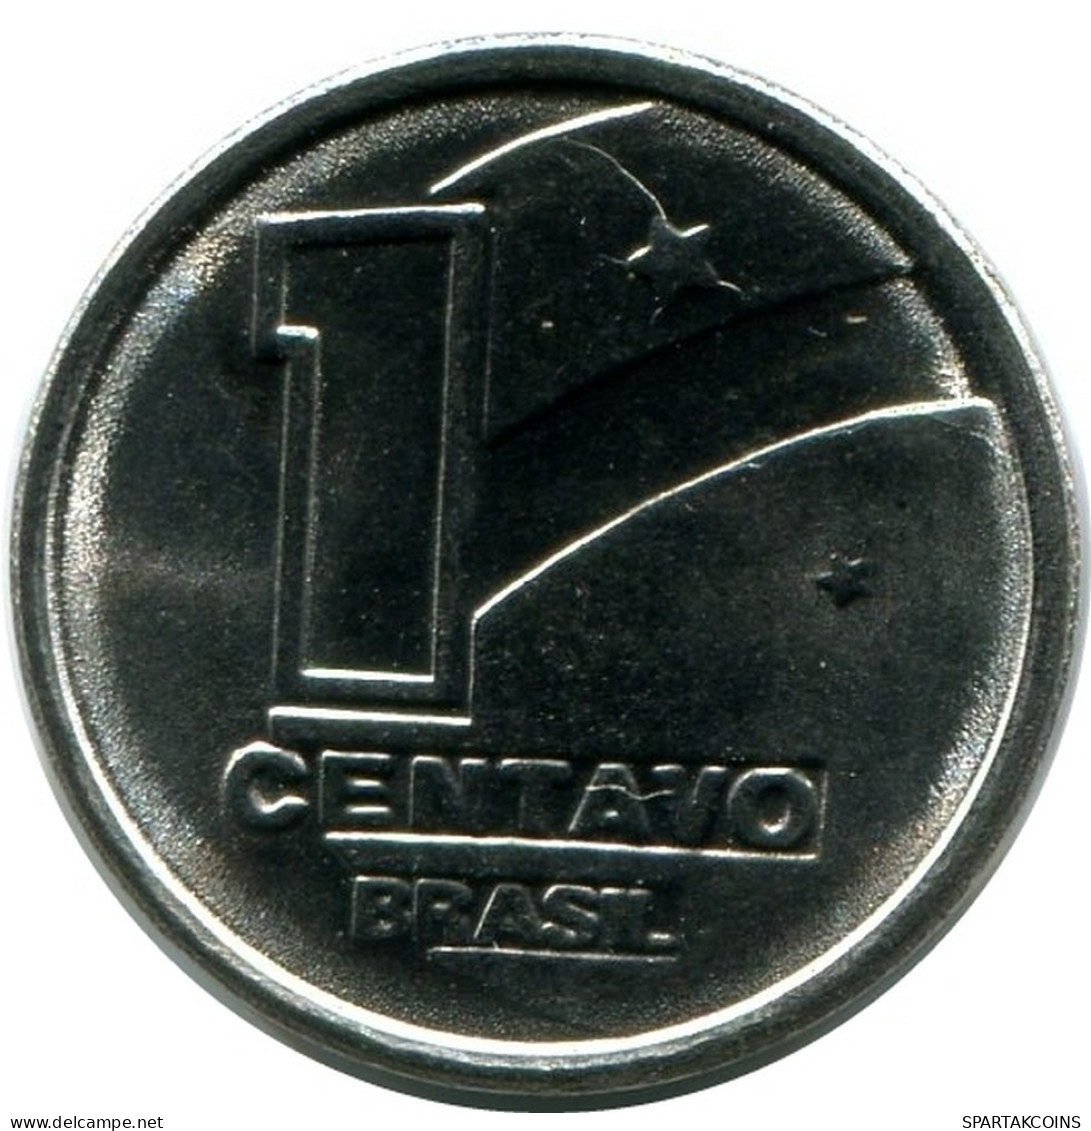 1 CENTAVO 1989 BRAZIL Coin UNC #M10107.U.A - Brazil